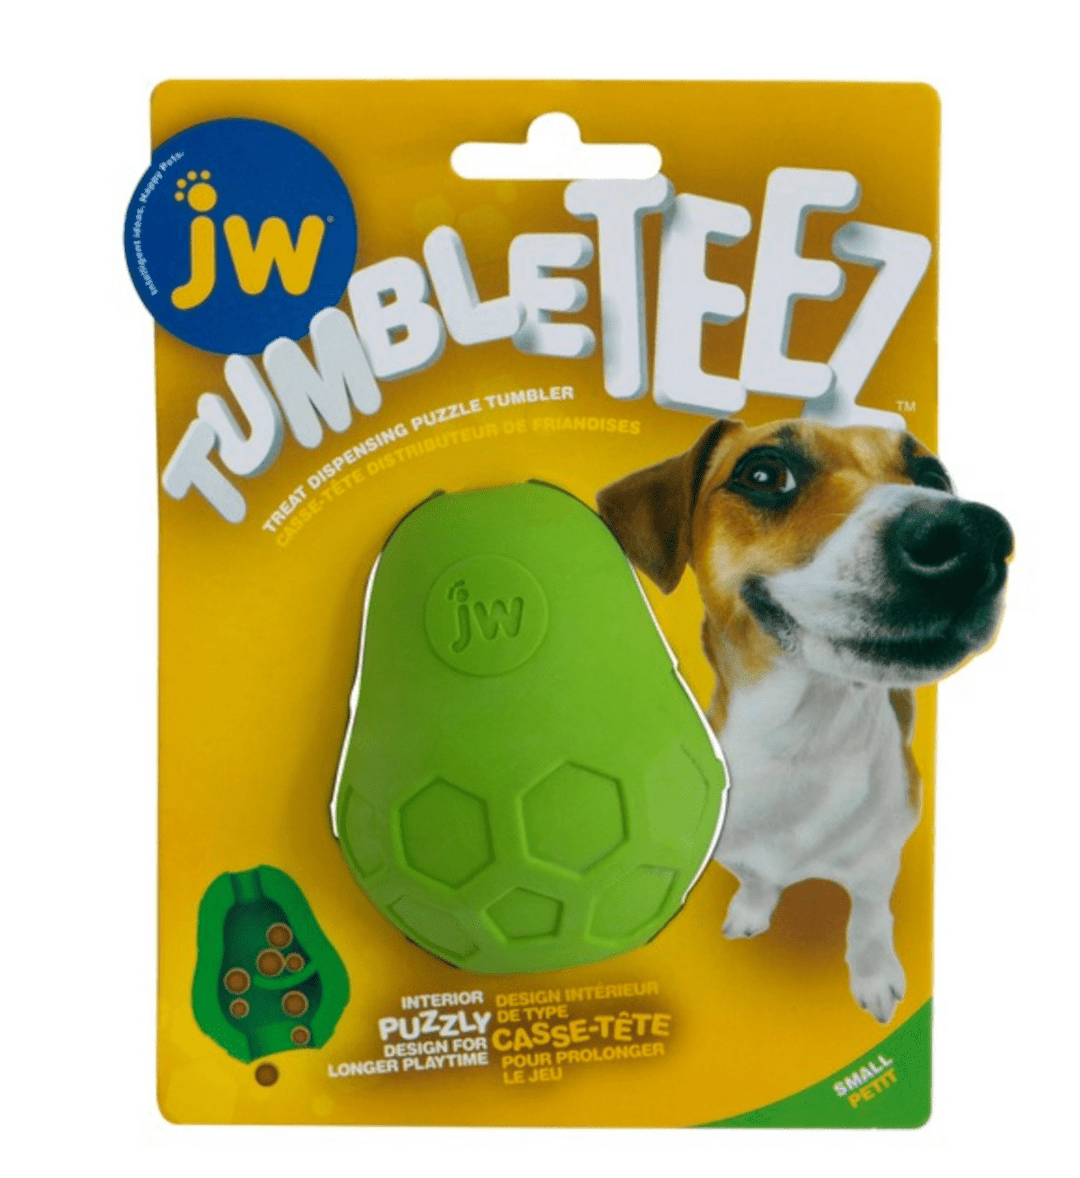 The JW Tumble Teez Dog Treat Dispensing Toy in Green#Green